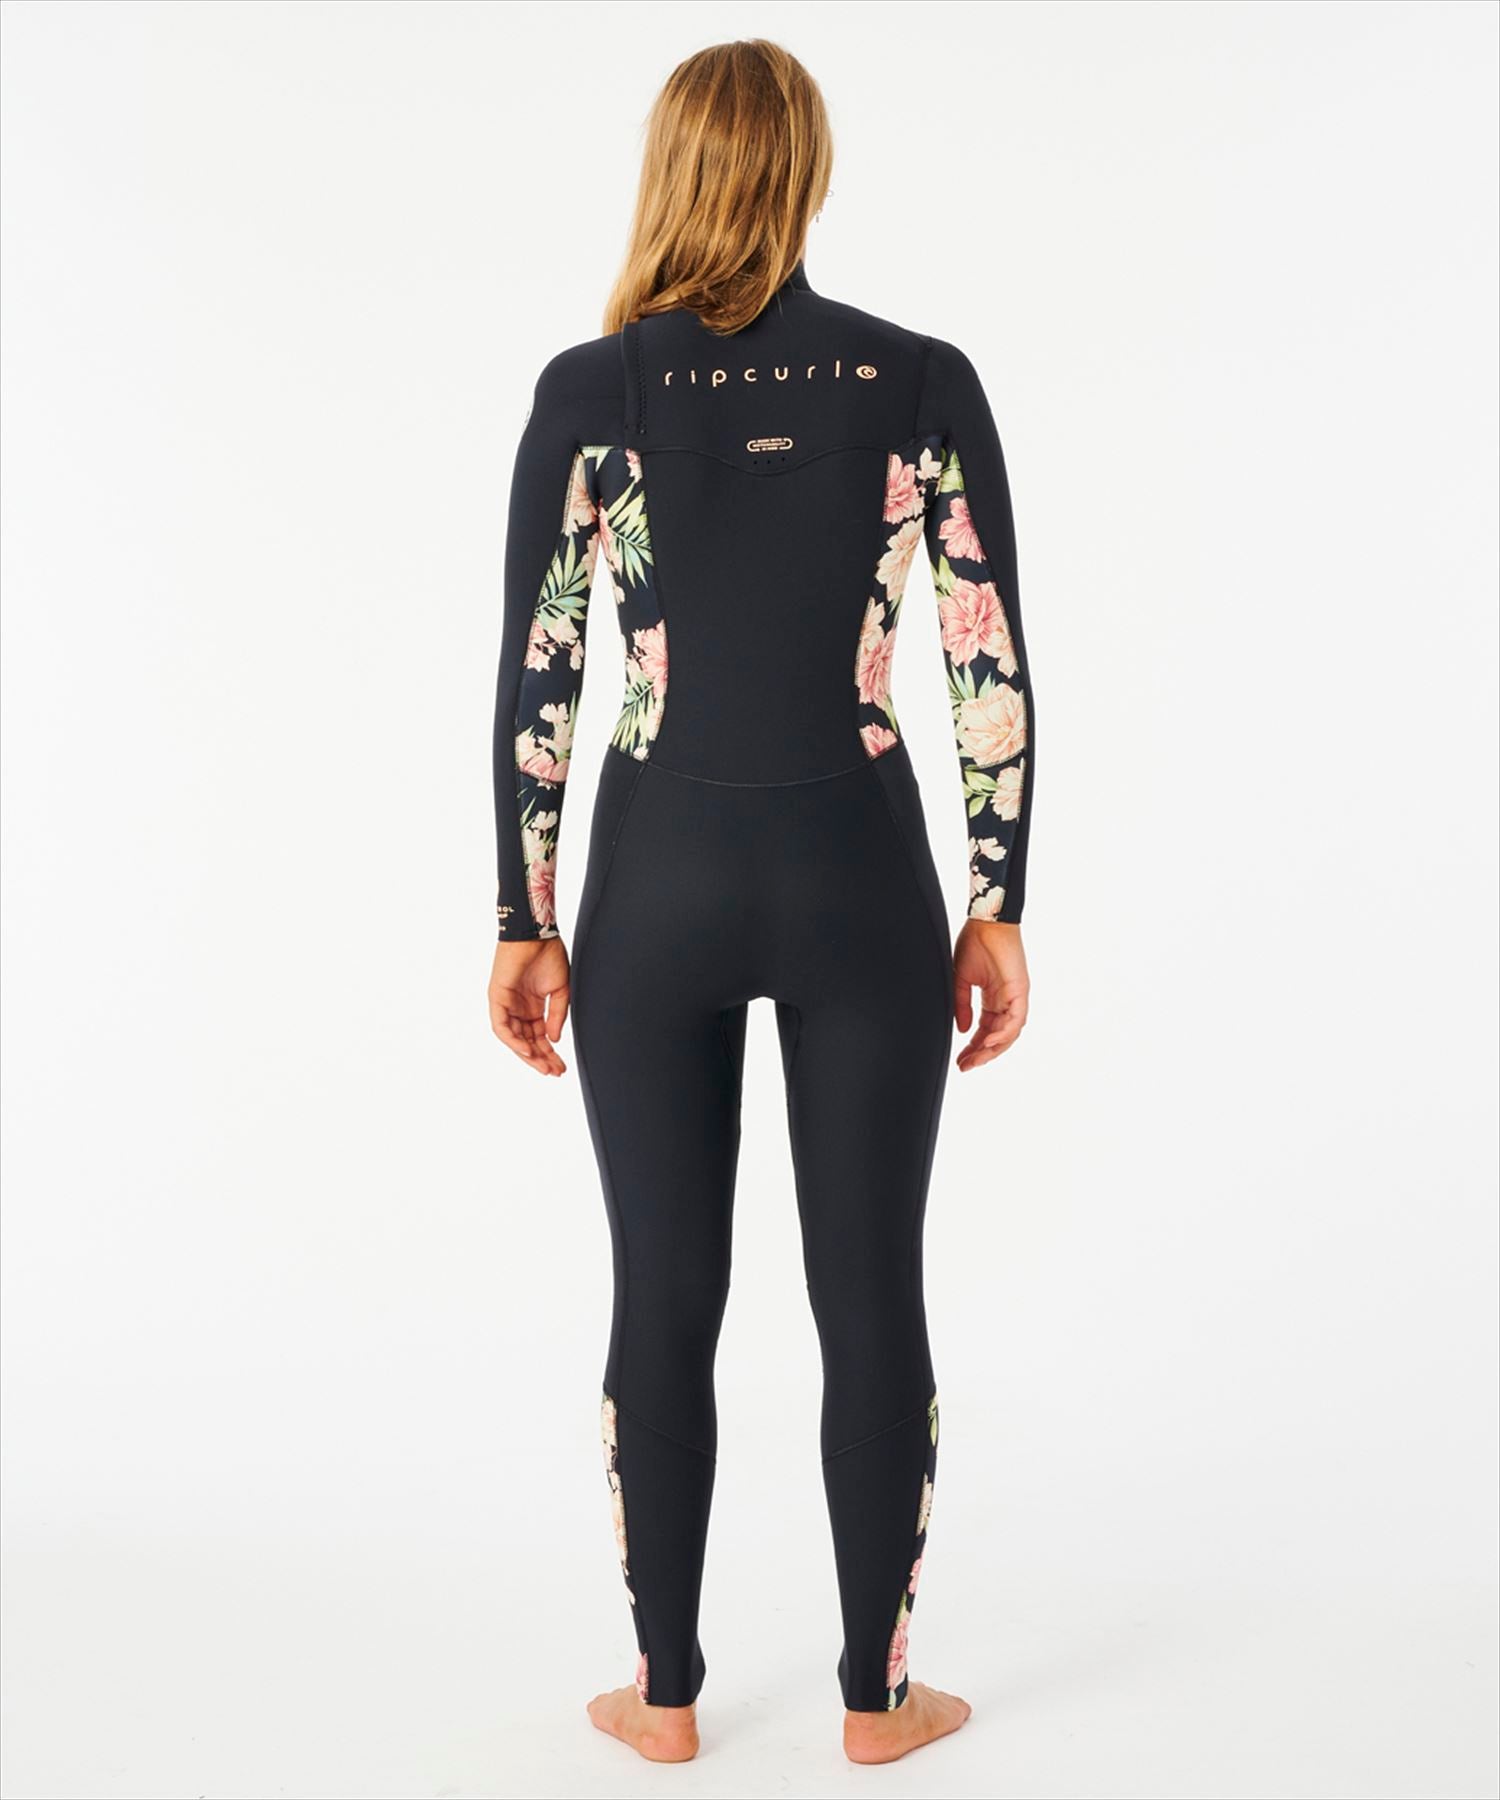 [SALE] [Spring/Autumn/Winter] Women's DAWN PATROL 5/3mm Chest Zip Full Suit Wetsuit